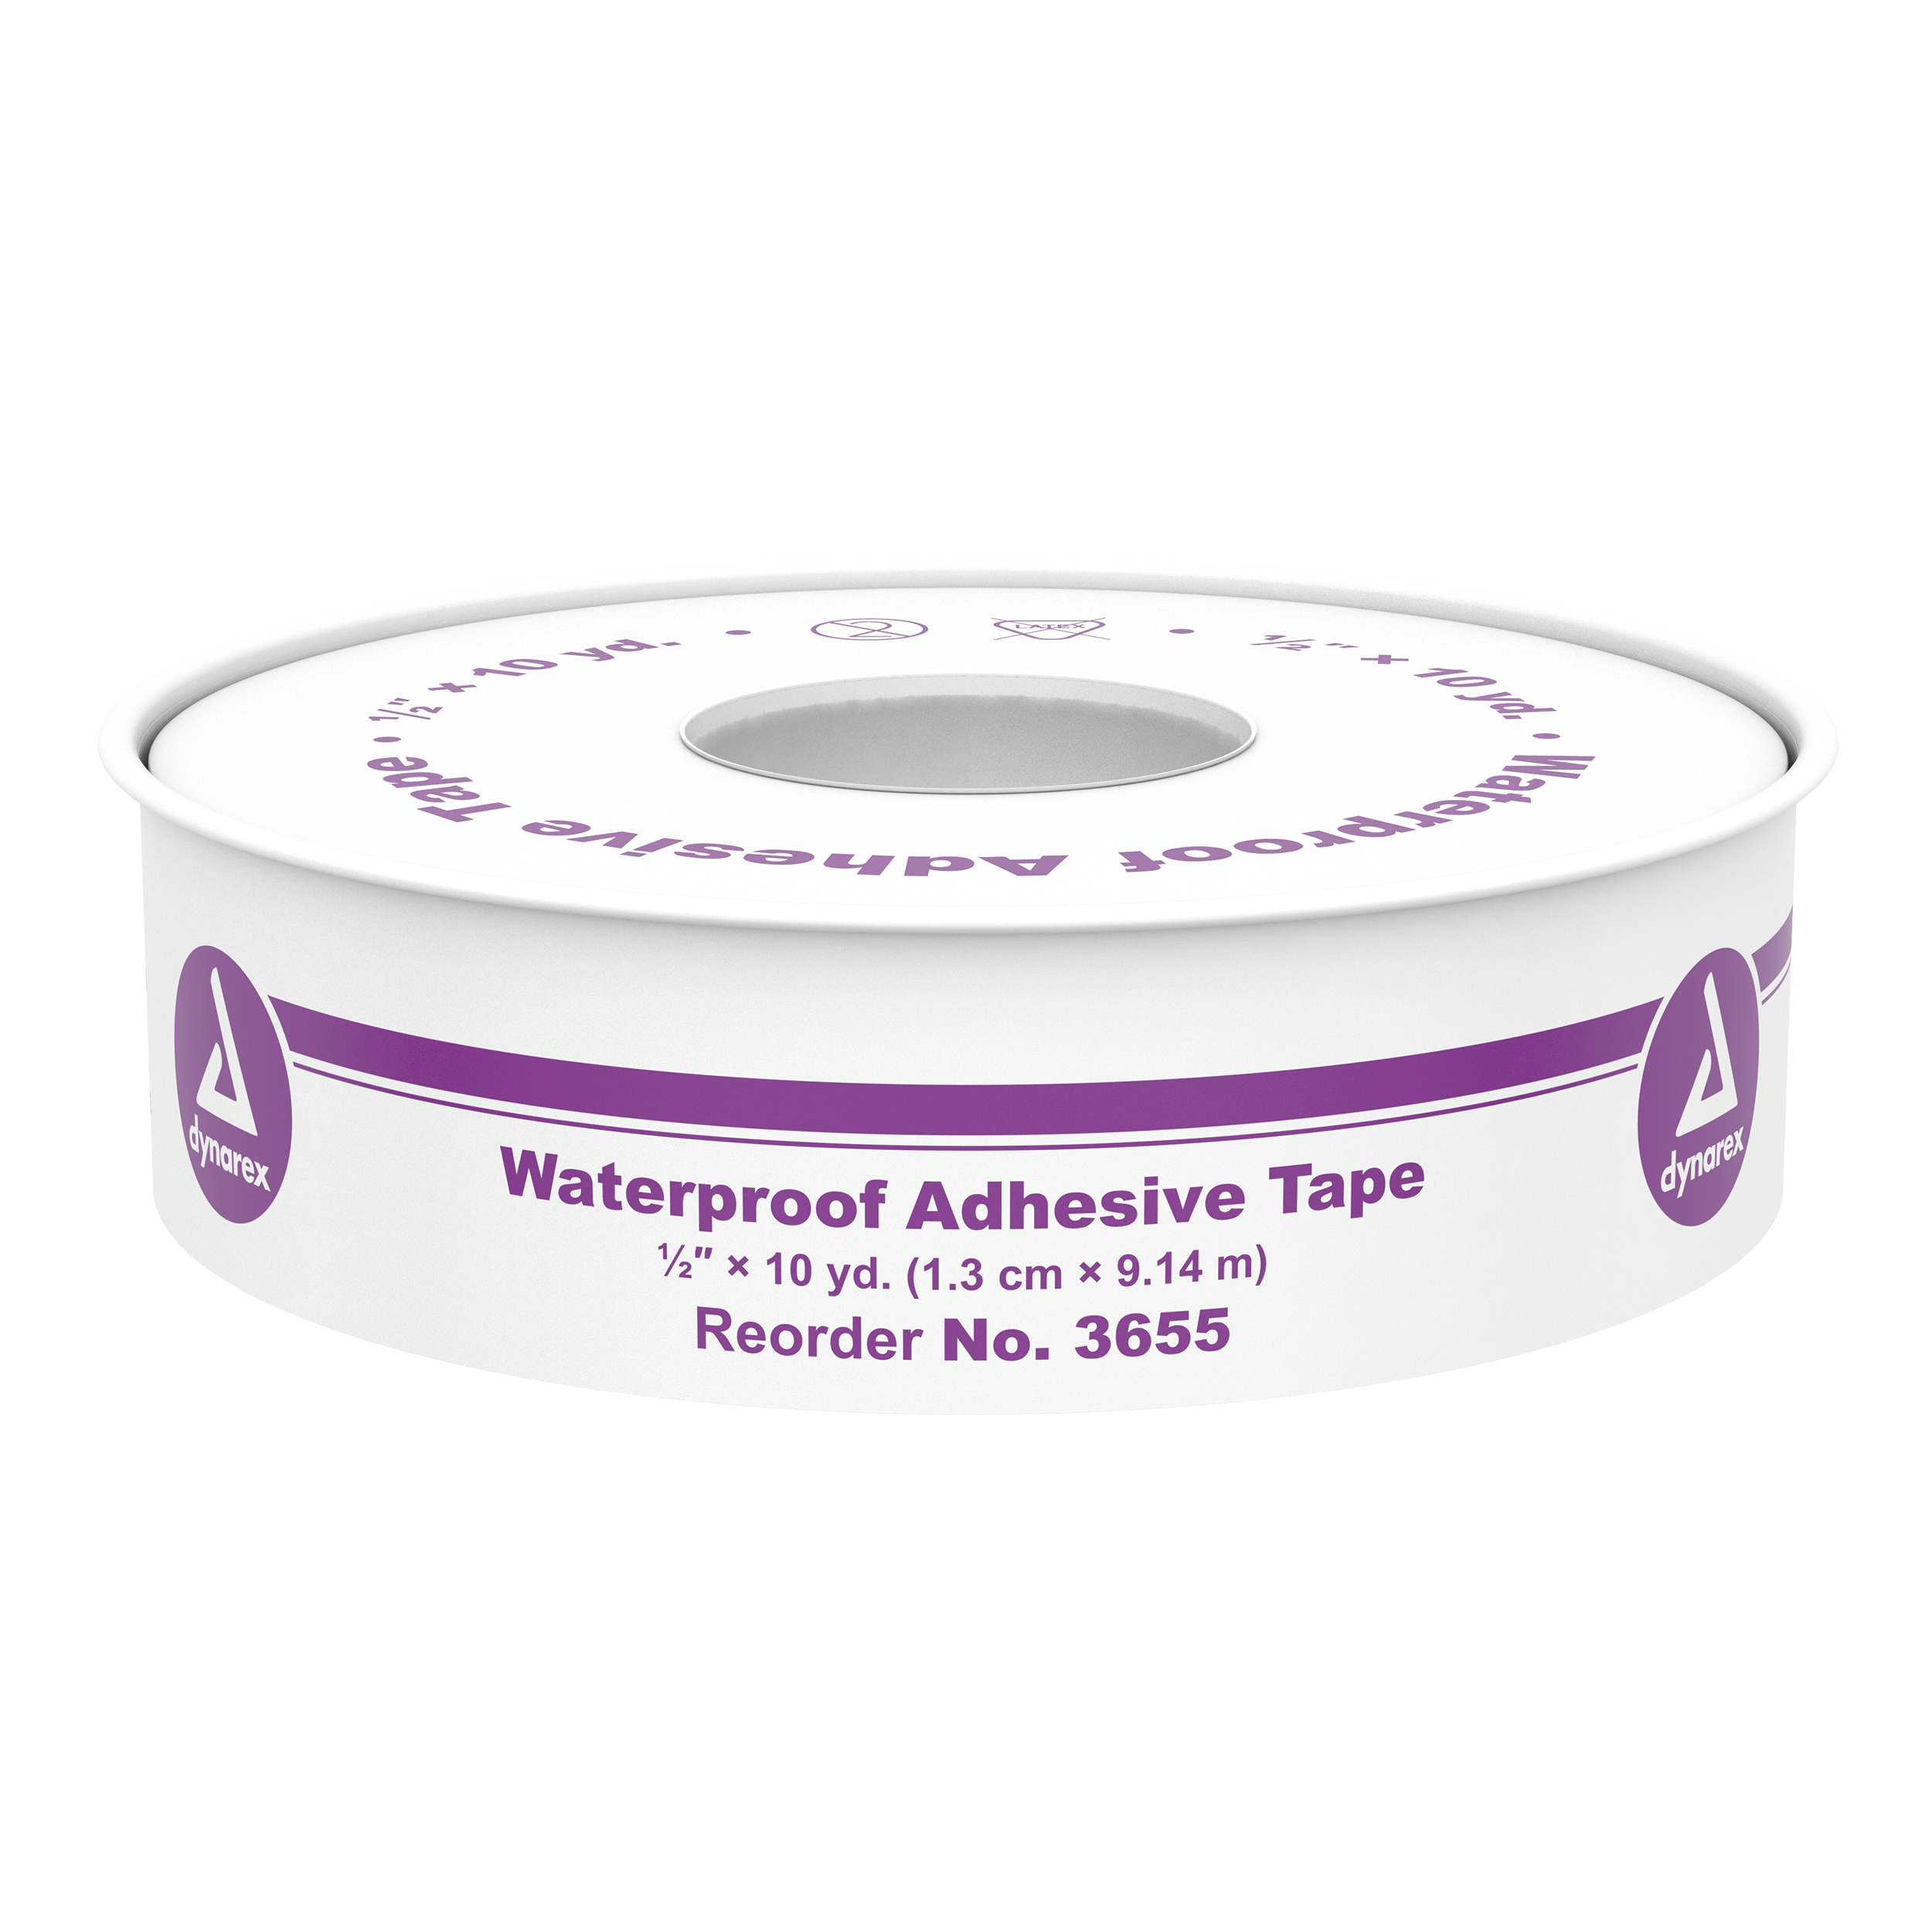 Waterproof Adhesive Tape 1/2